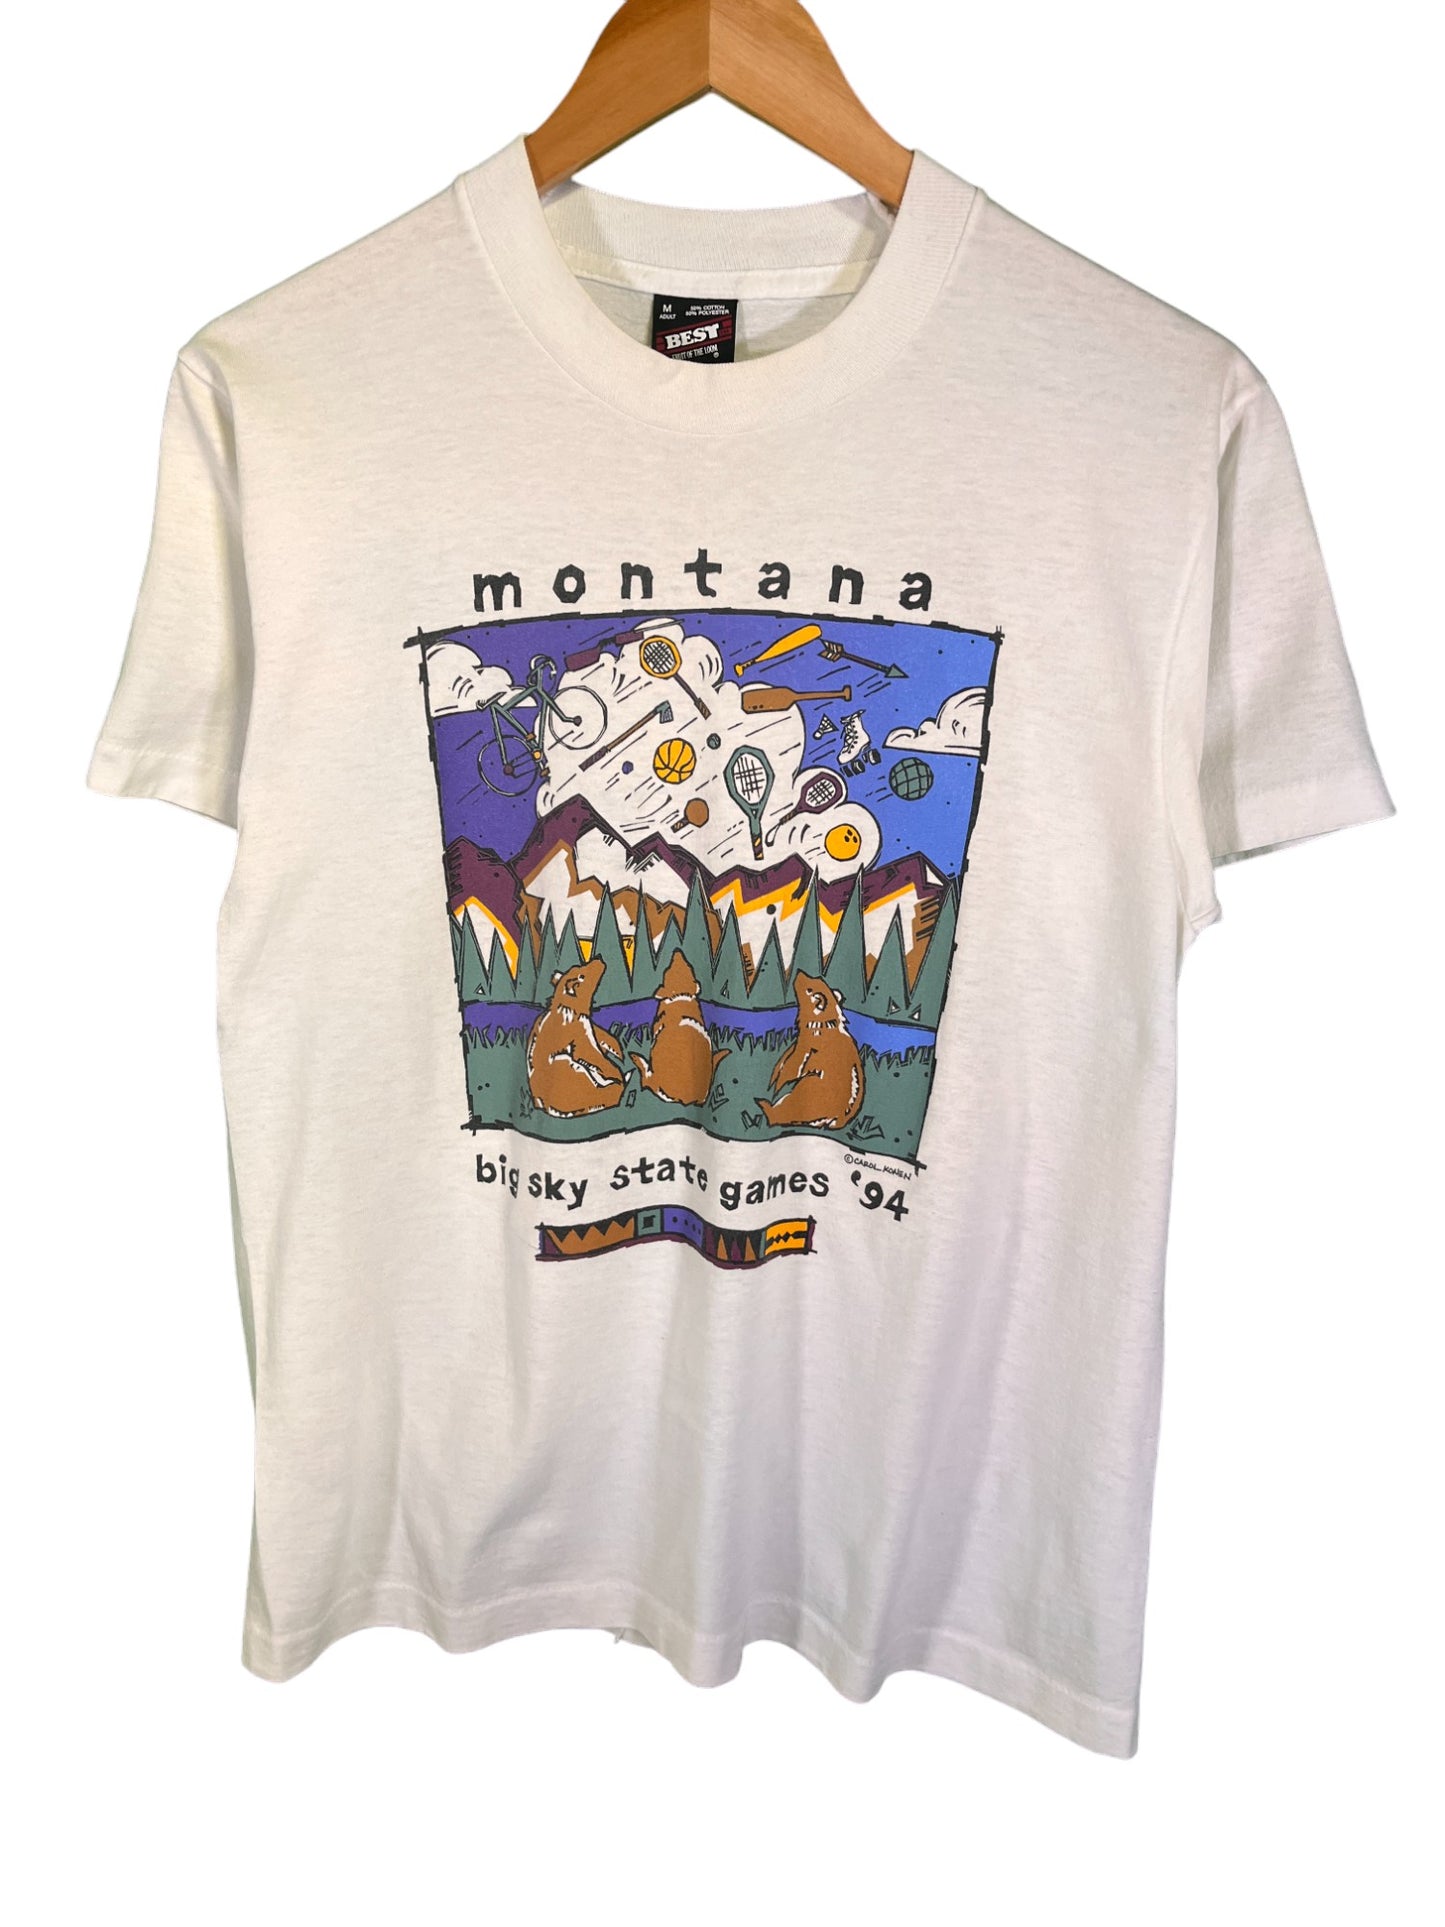 Vintage 1994 Montana Big Sky State Games Graphic Tee Size Medium